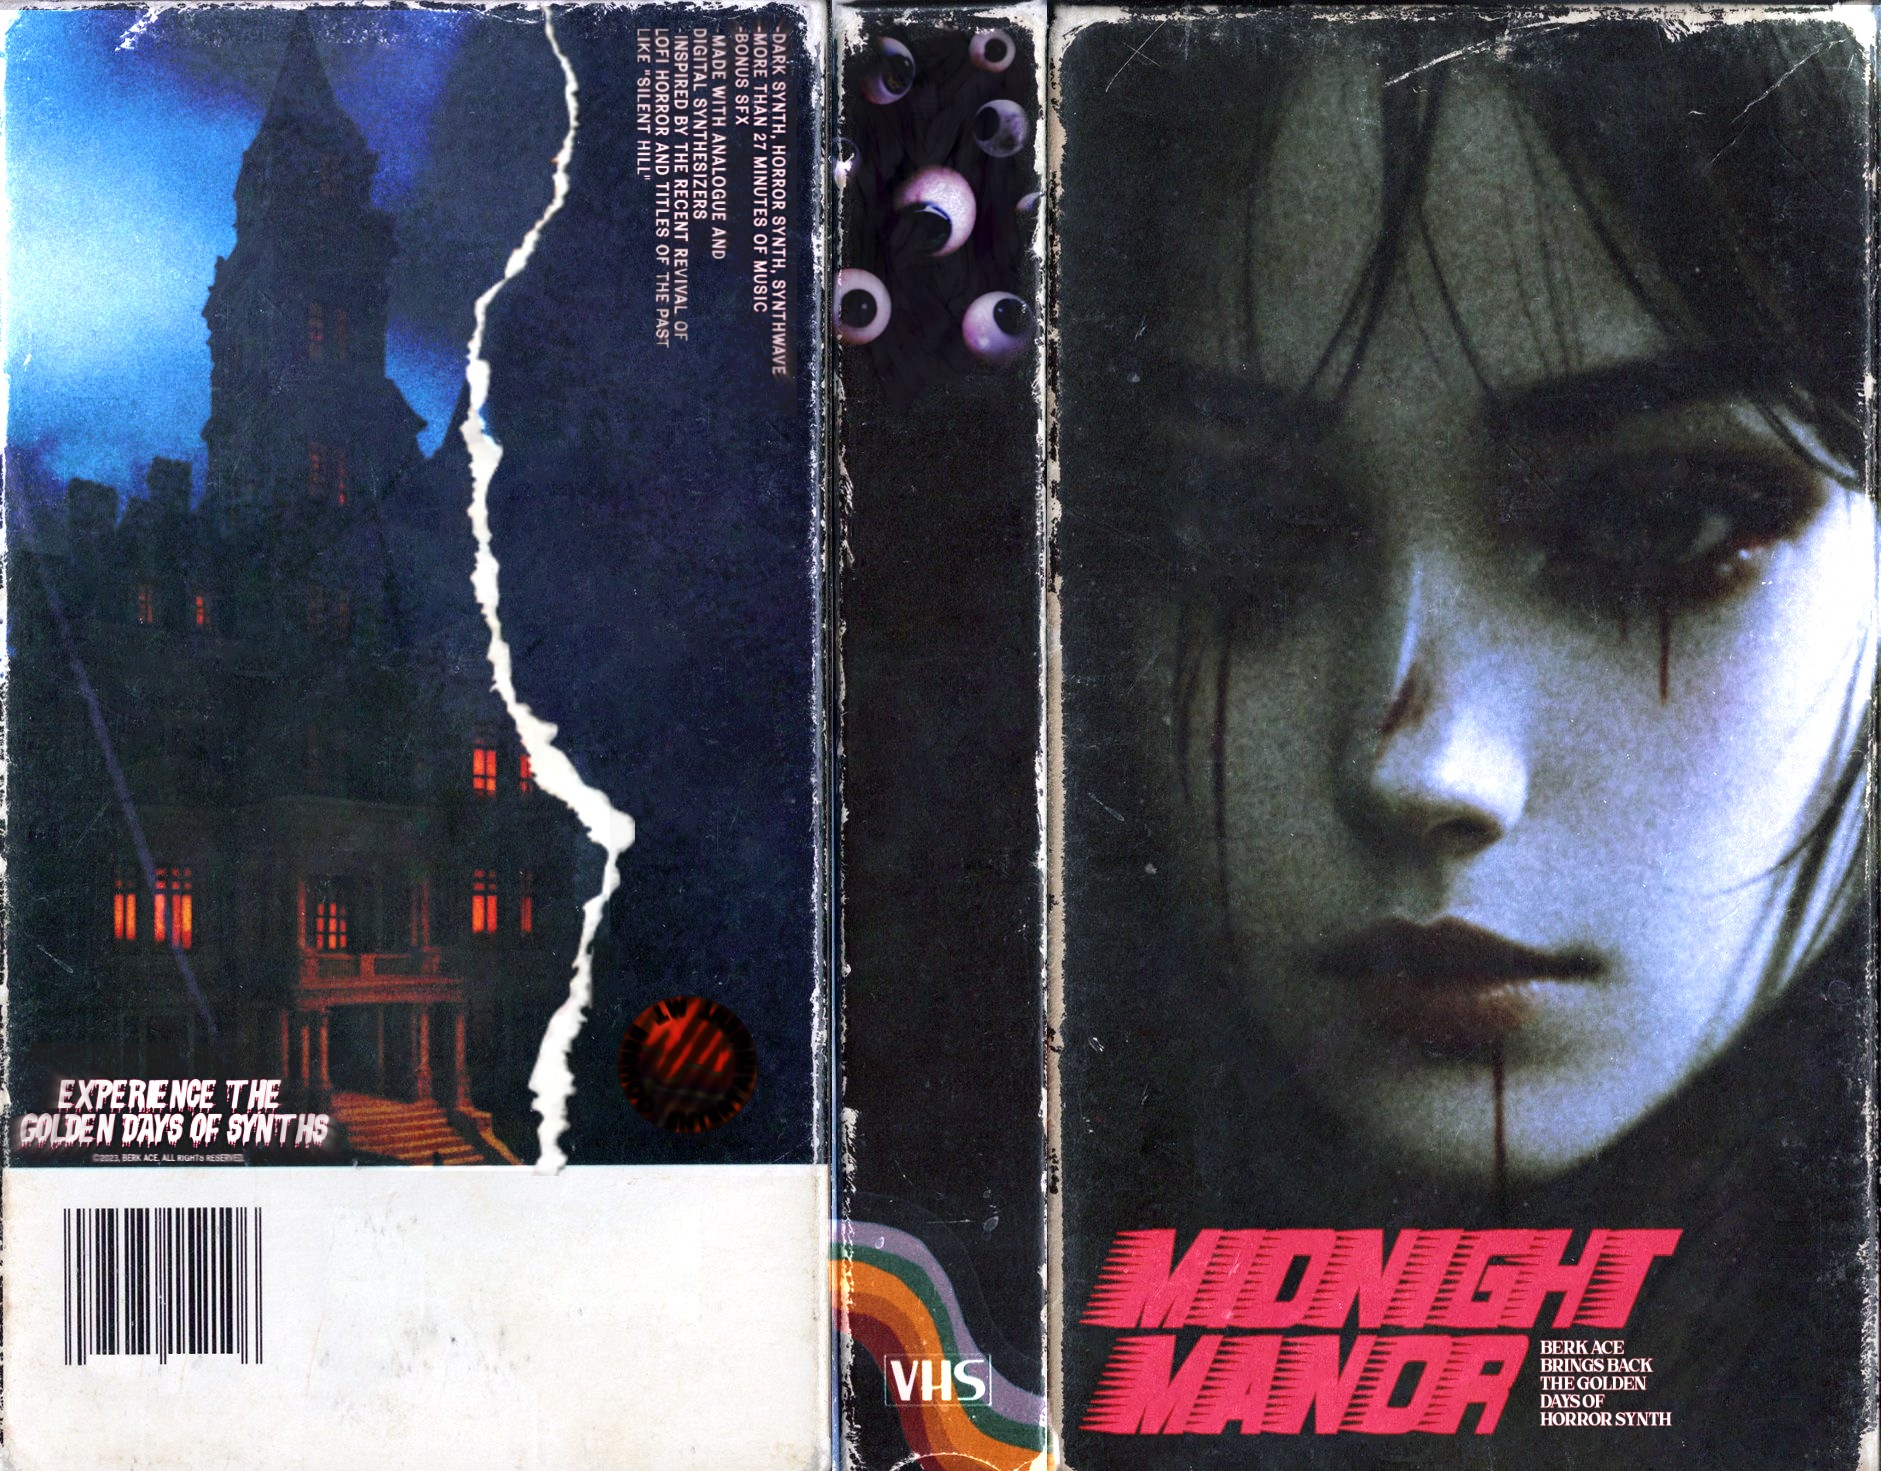 80s/90s Synthwave, Retro Horror Soundtrack - "MIDNIGHT MANOR"